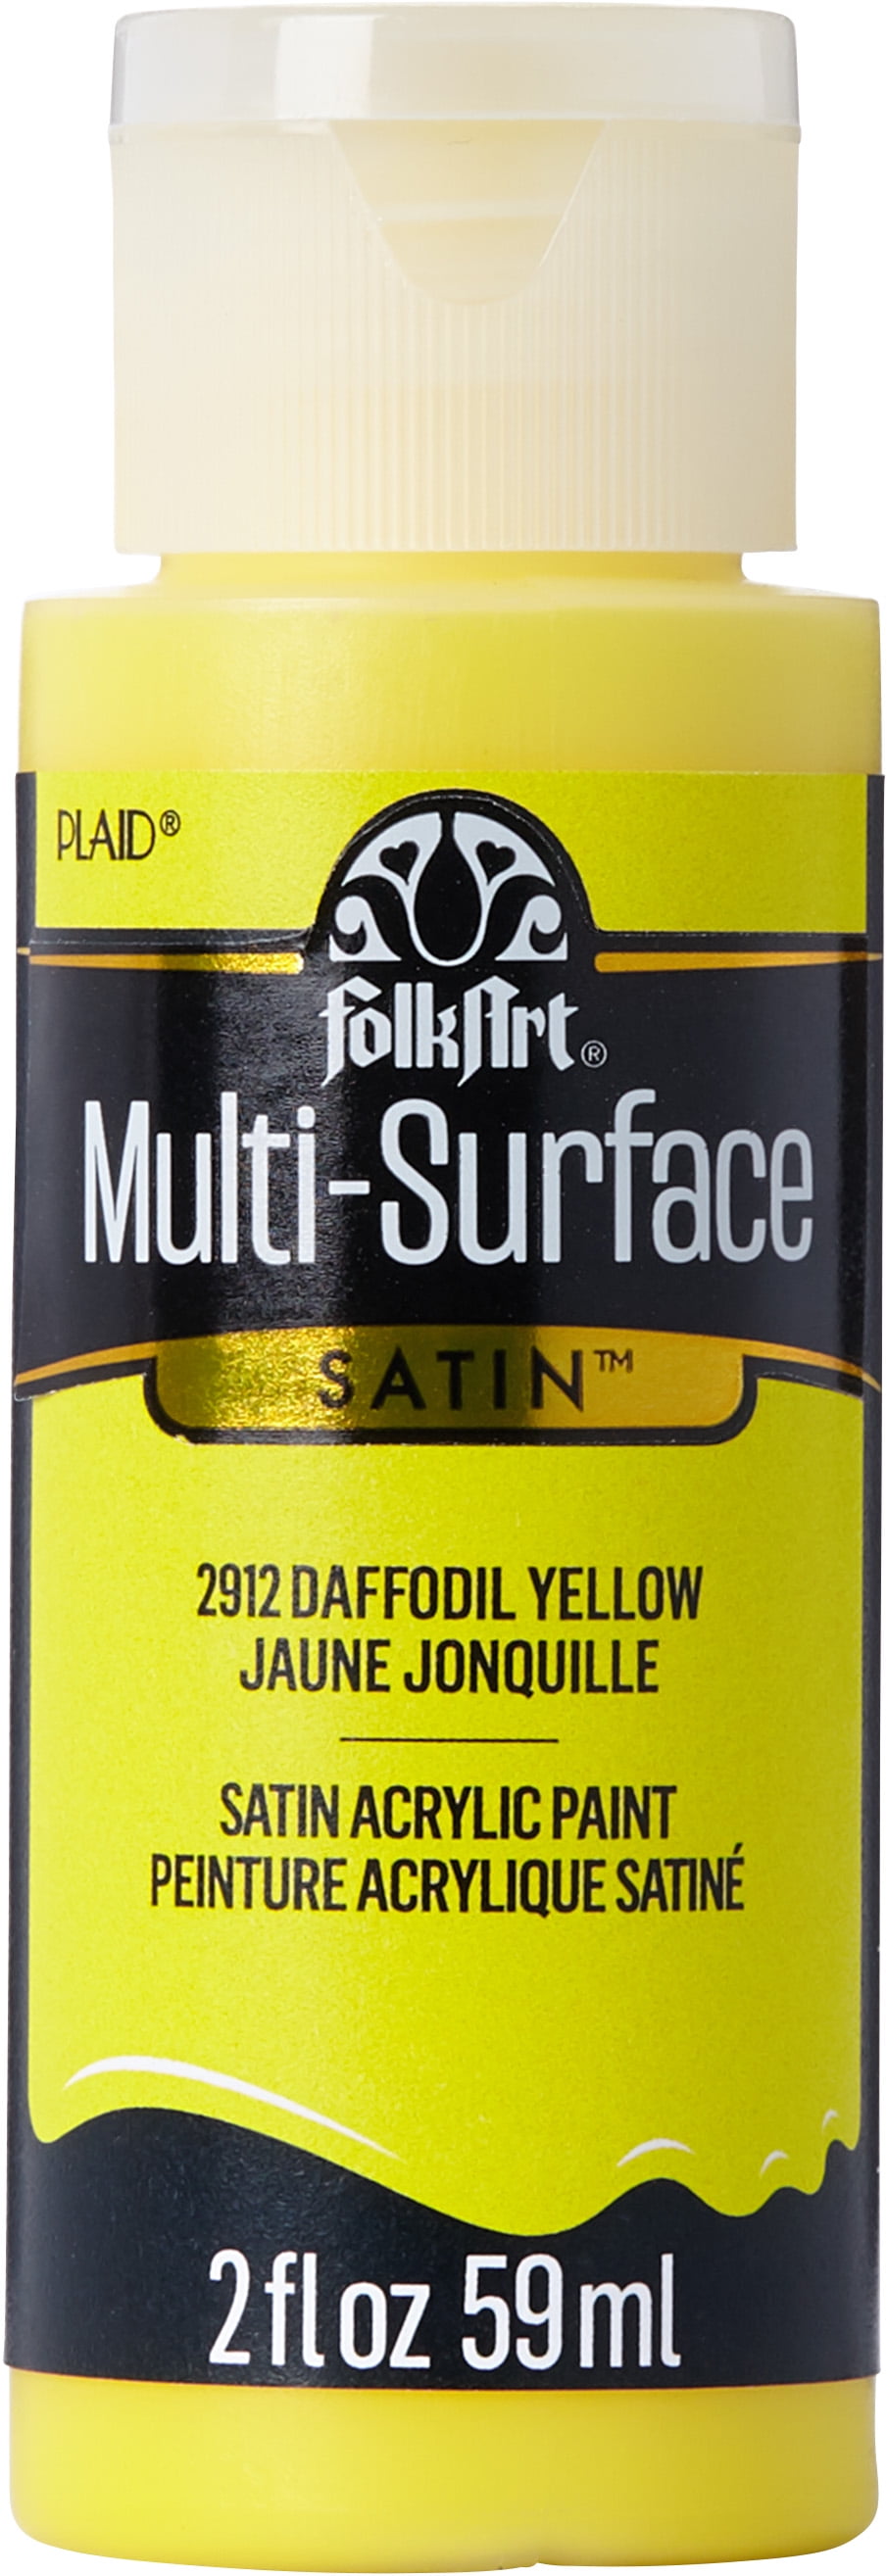 FolkArt Multi-Surface Acrylic Craft Paint, Satin Finish, Aqua, 2